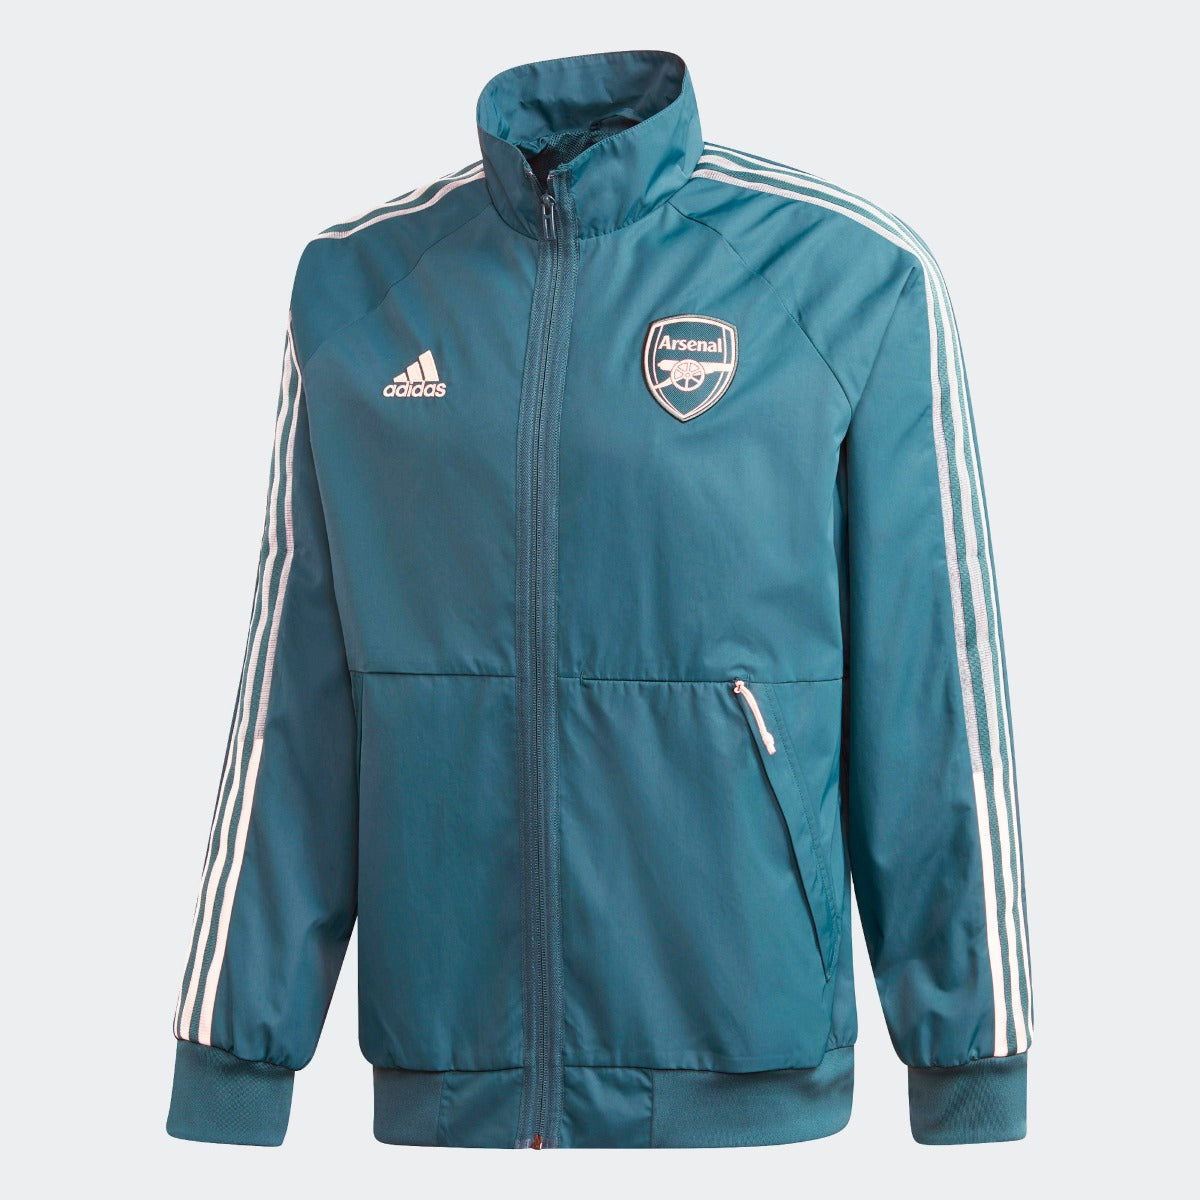 Adidas 2020-21 Arsenal Anthem Jacket - Rich Green